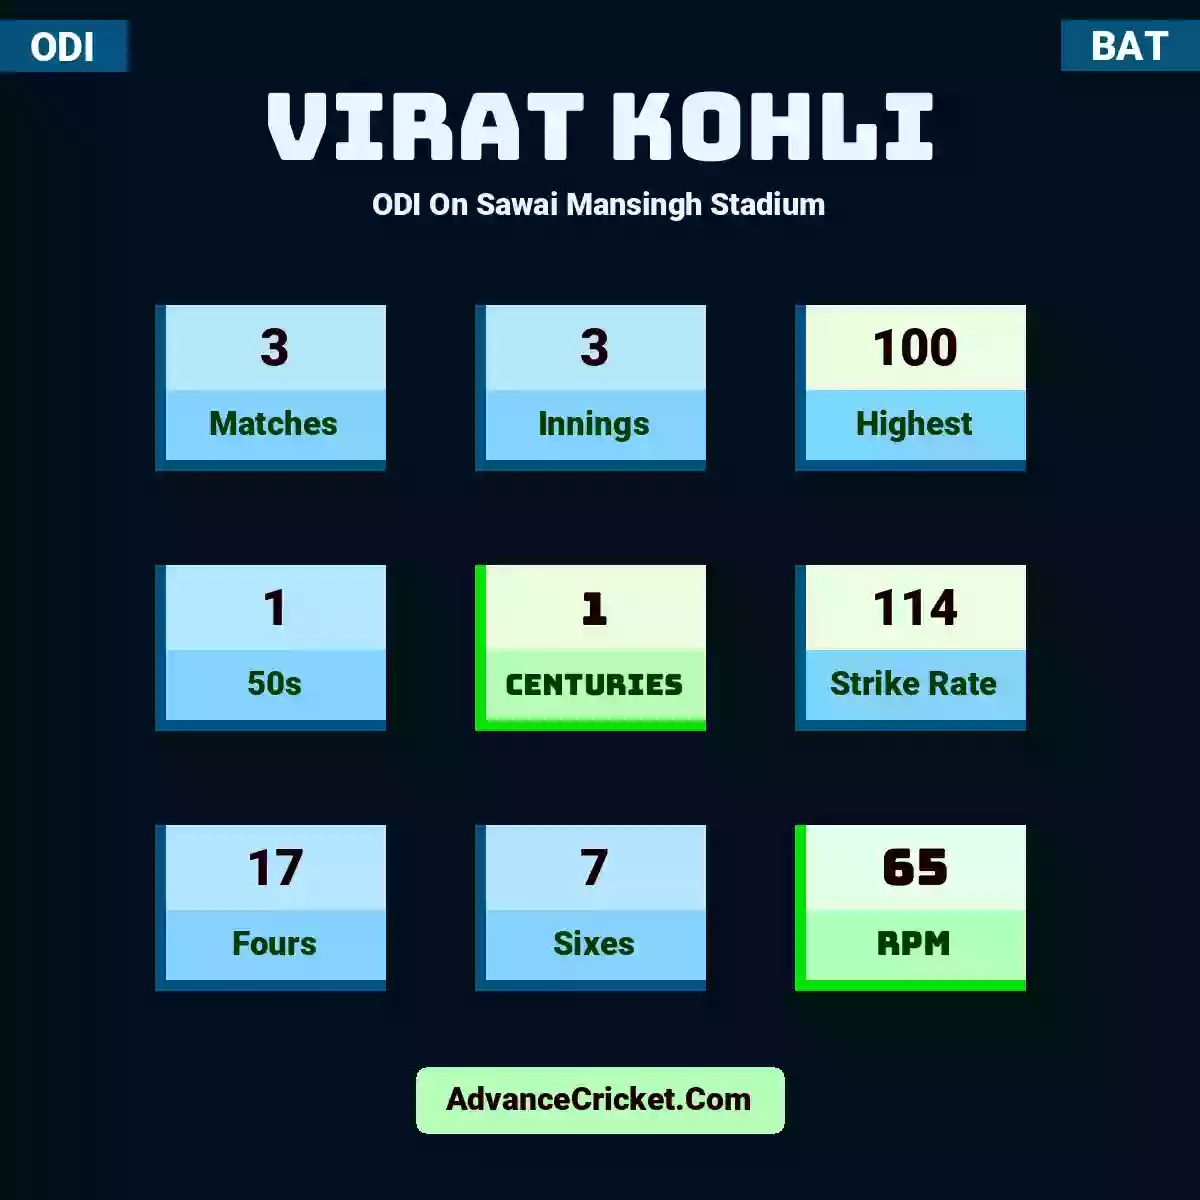 Virat Kohli ODI  On Sawai Mansingh Stadium, Virat Kohli played 3 matches, scored 100 runs as highest, 1 half-centuries, and 1 centuries, with a strike rate of 114. V.Kohli hit 17 fours and 7 sixes, with an RPM of 65.